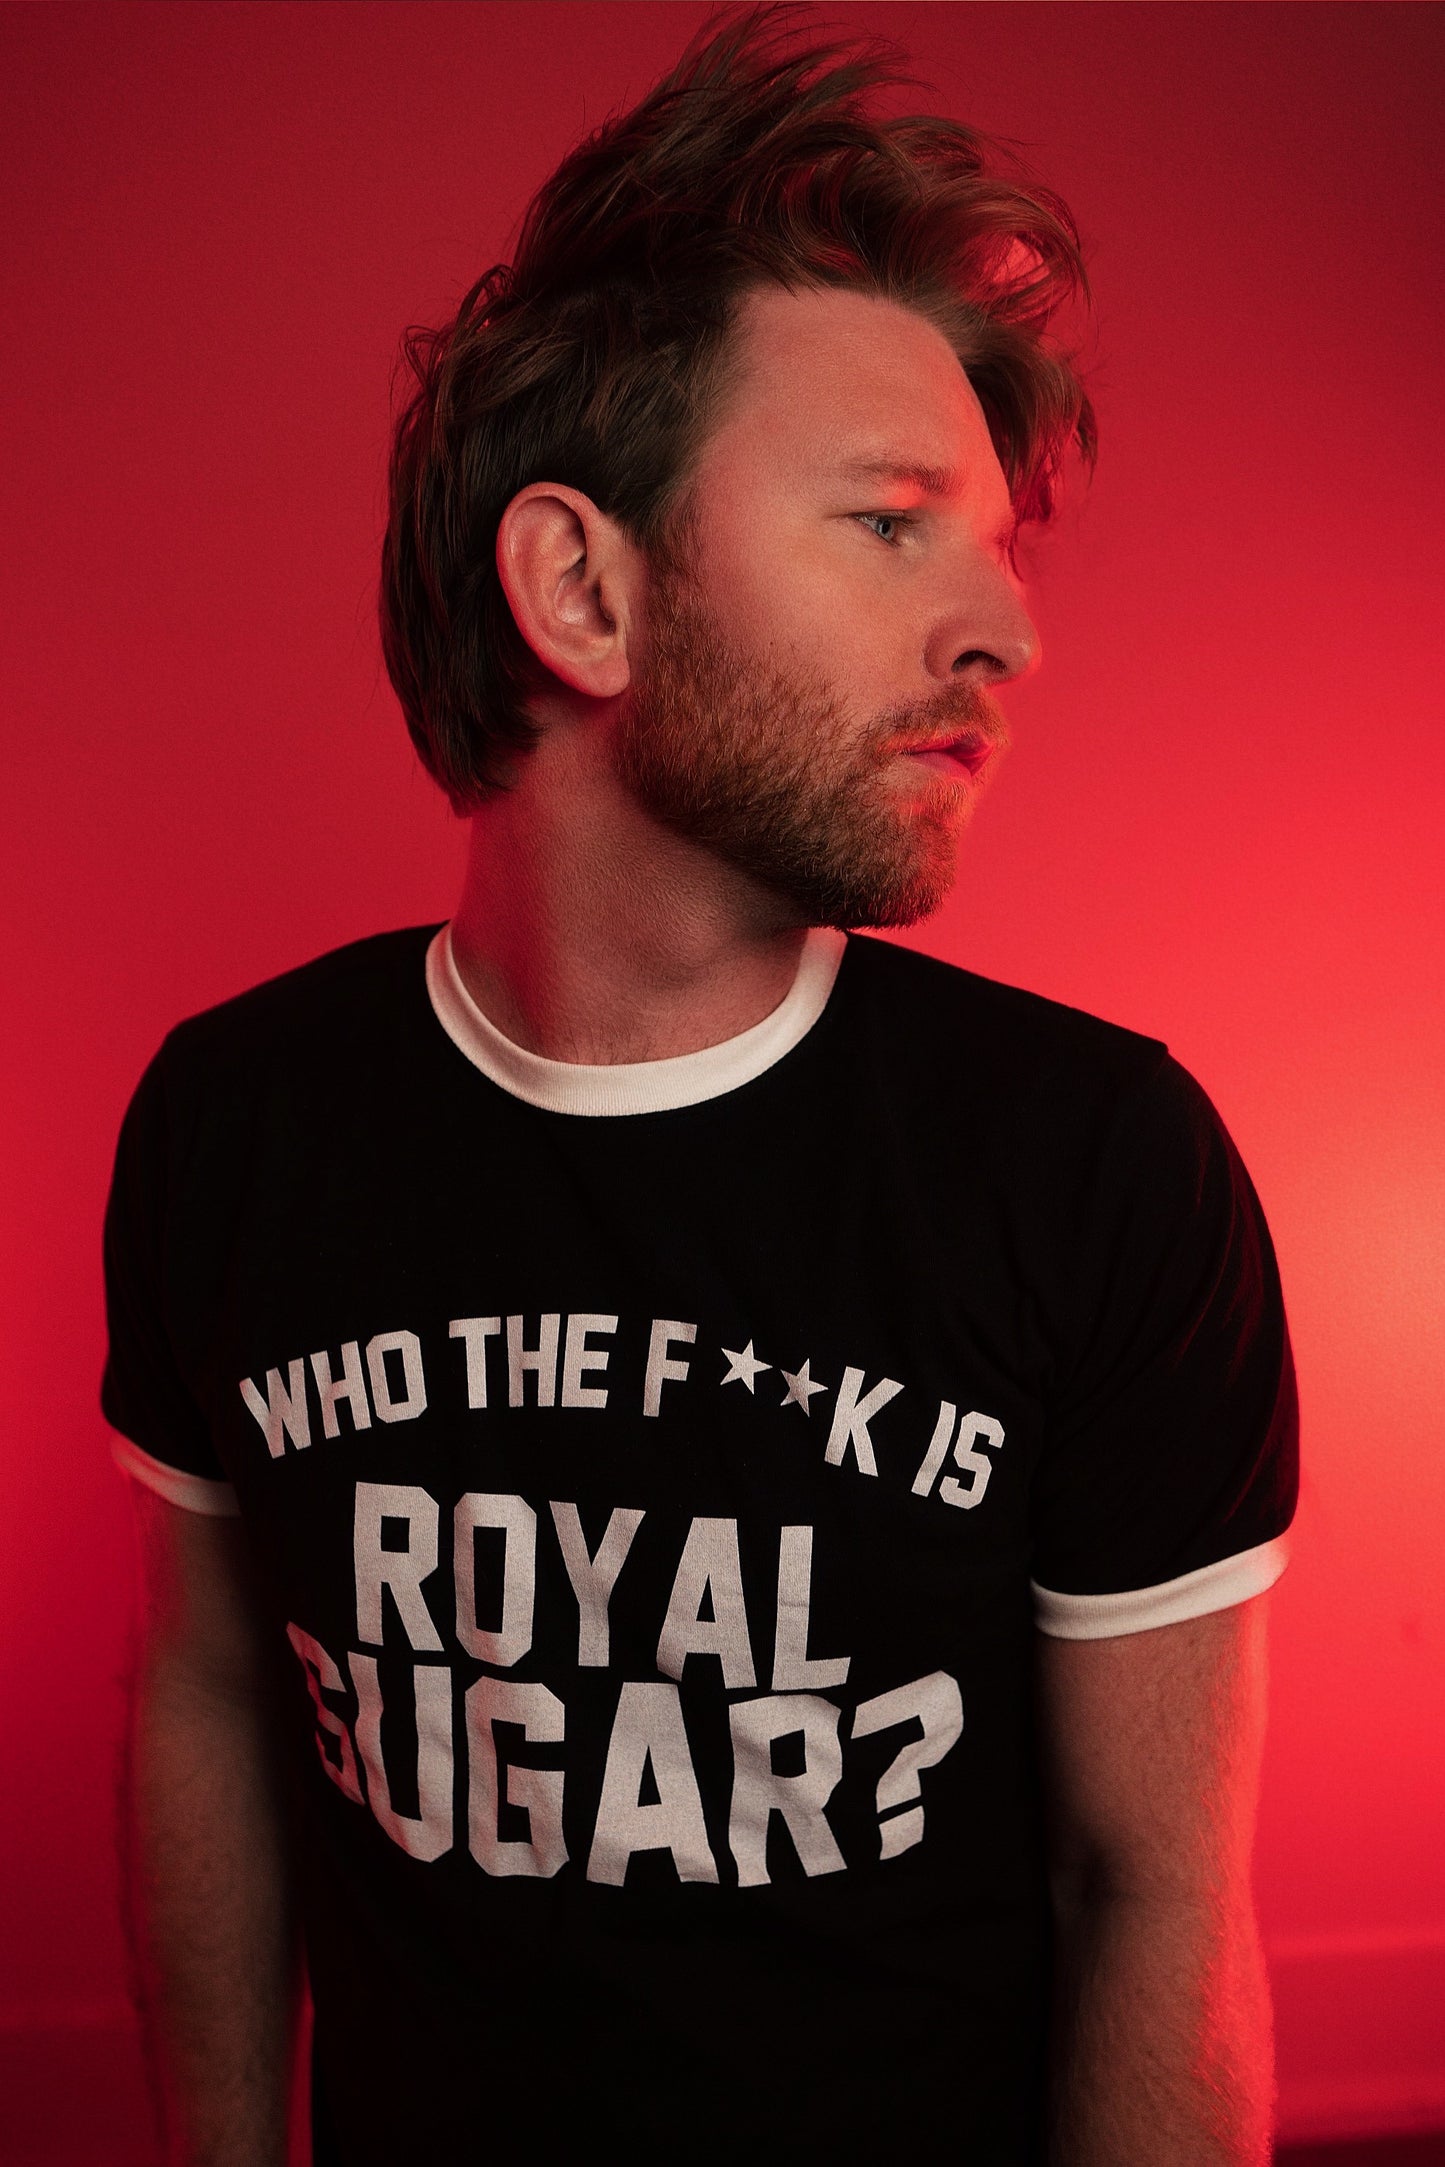 Who The F✩✩K is Royal Sugar? T-Shirt